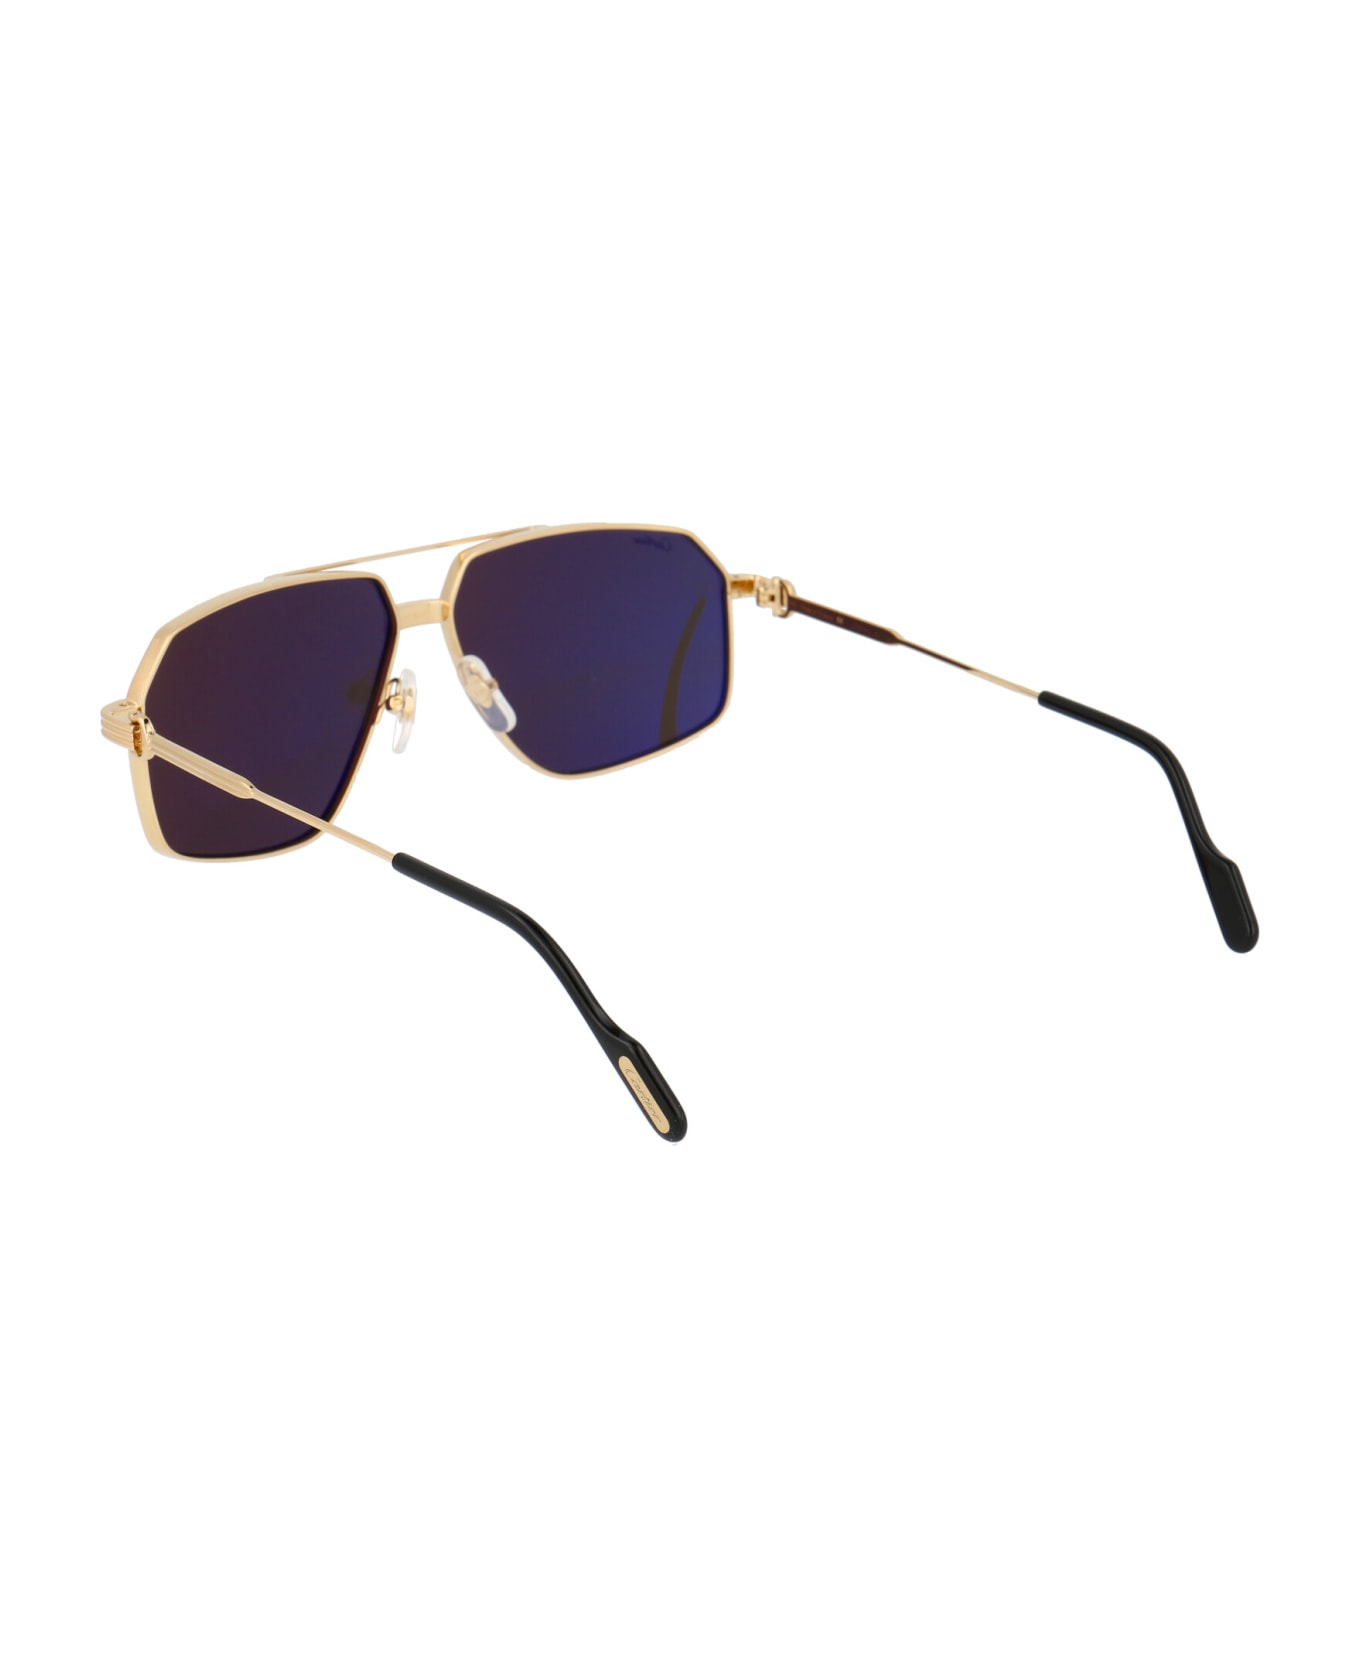 Cartier Eyewear Ct0270s Sunglasses - 001 GOLD GOLD GREY